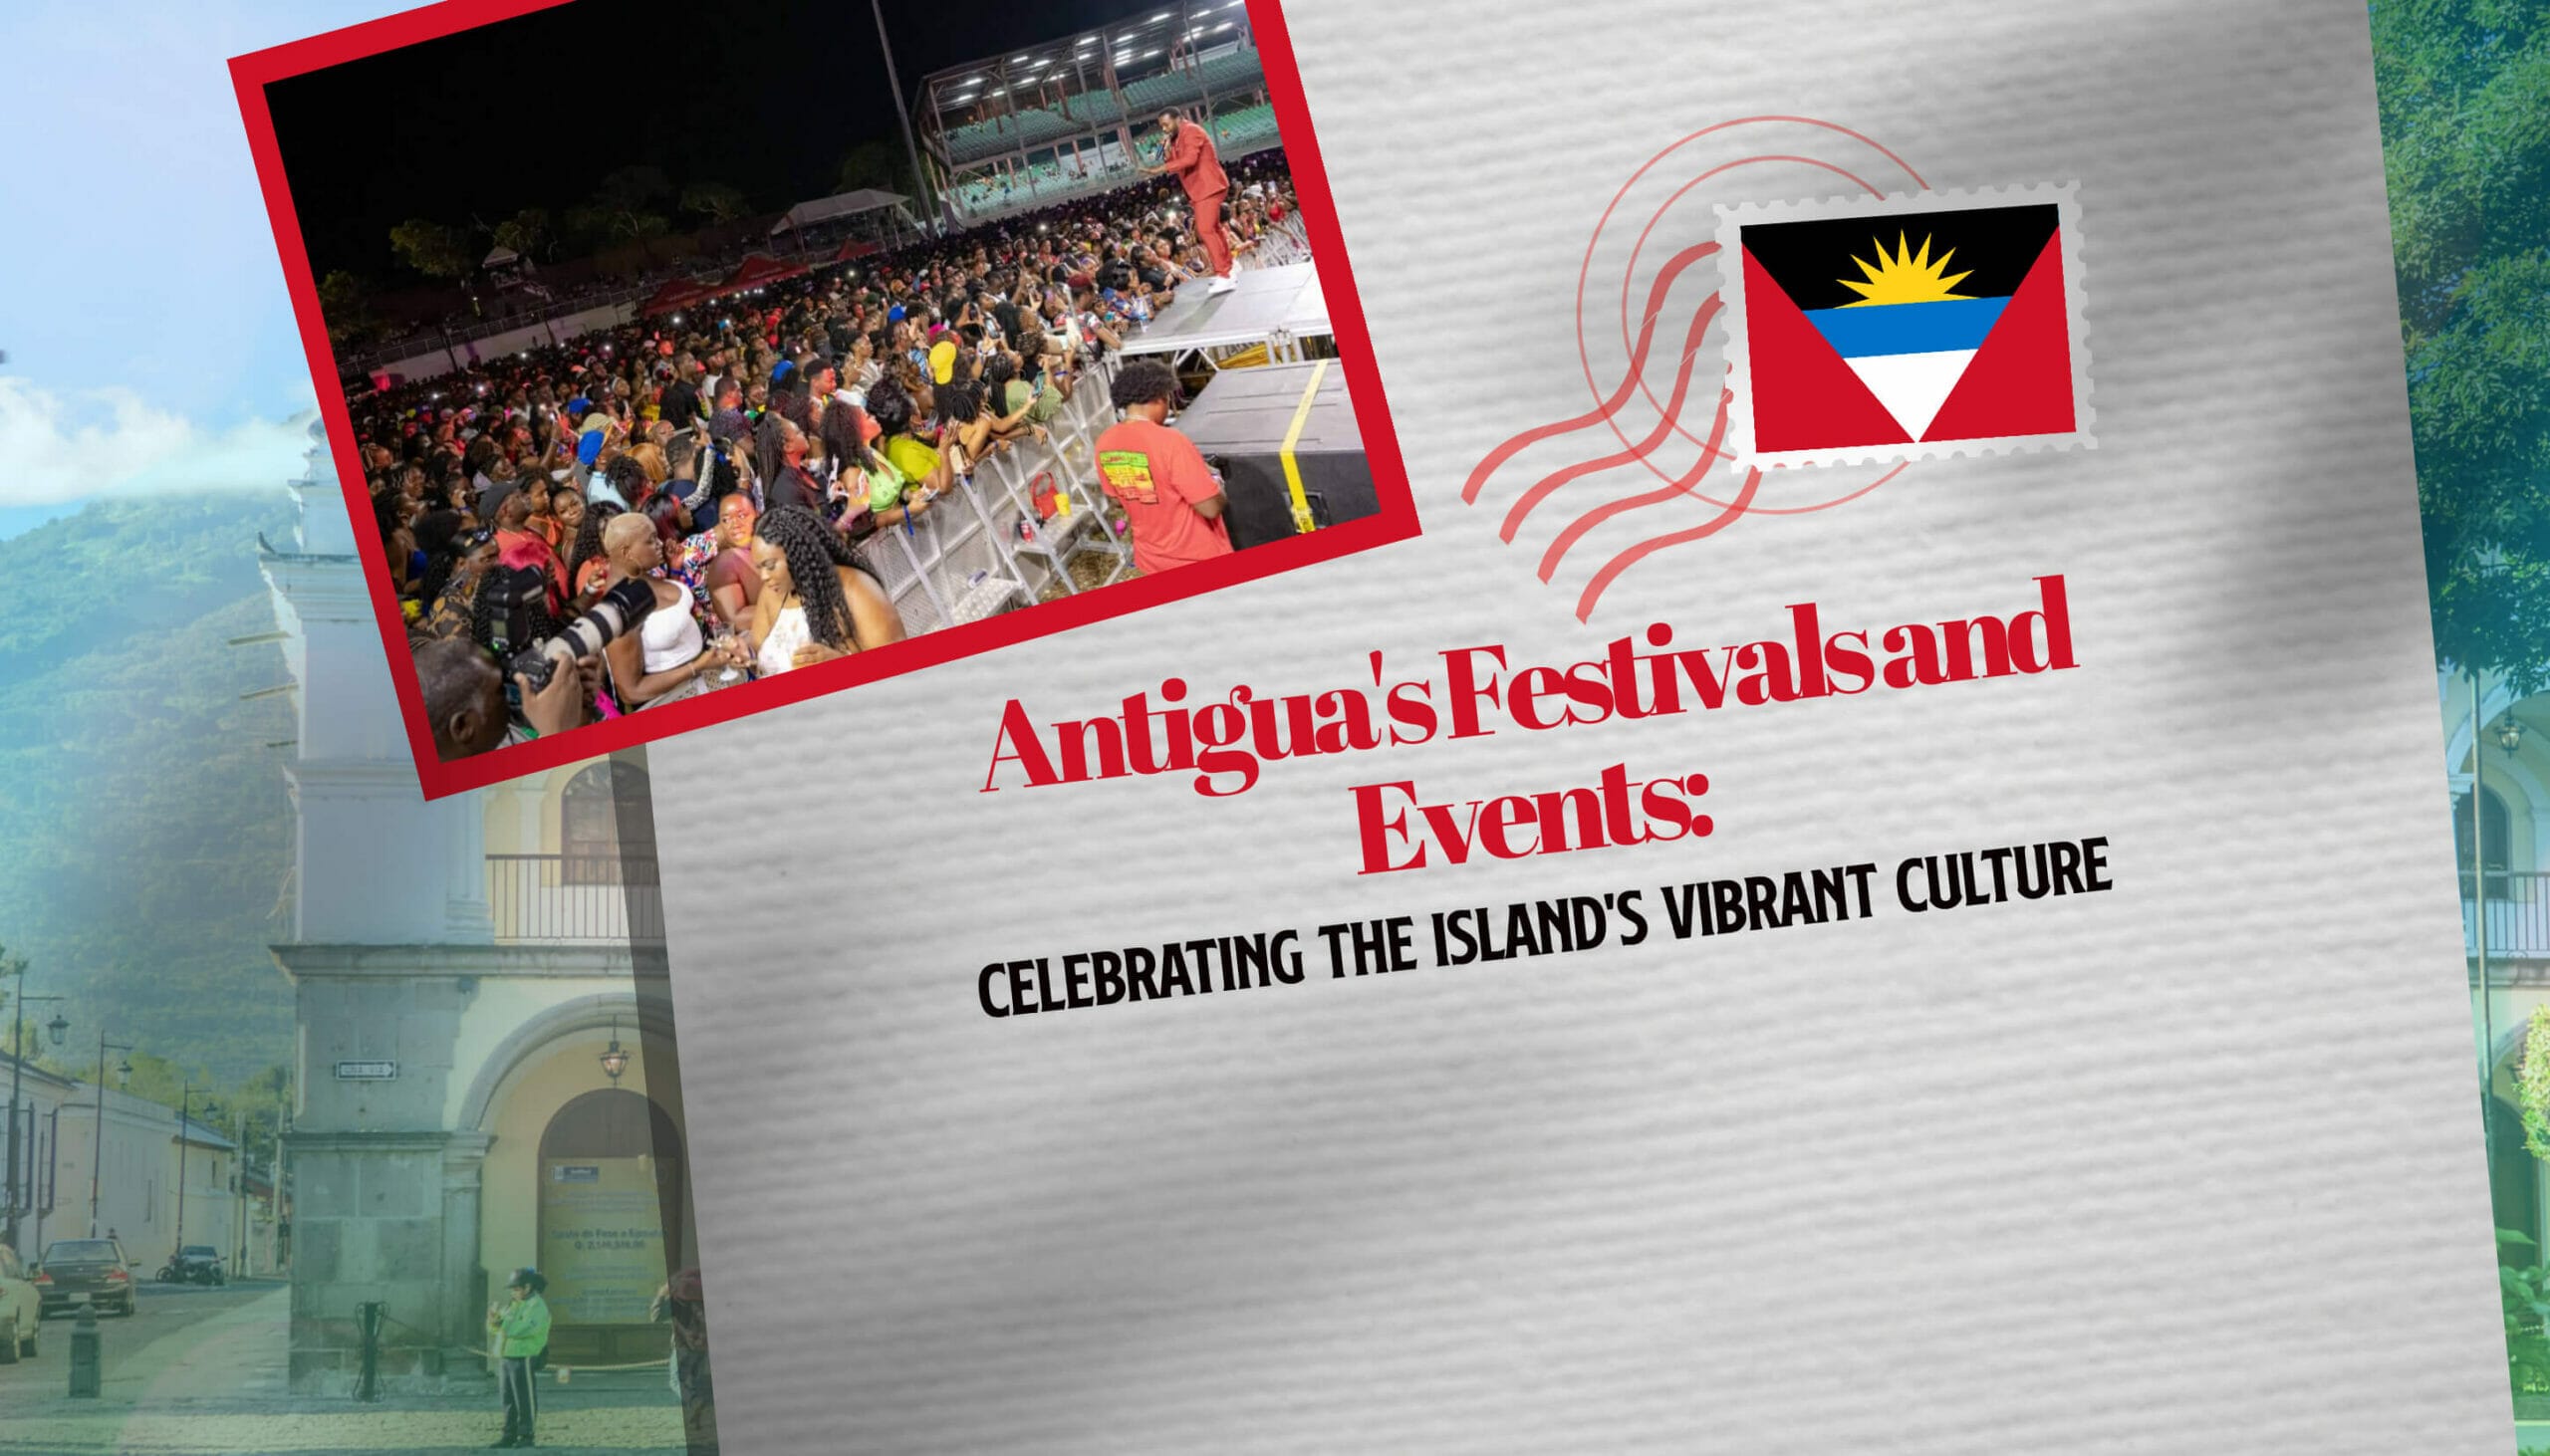 Antigua's Festivals and Events Celebrating the Island's Vibrant Culture